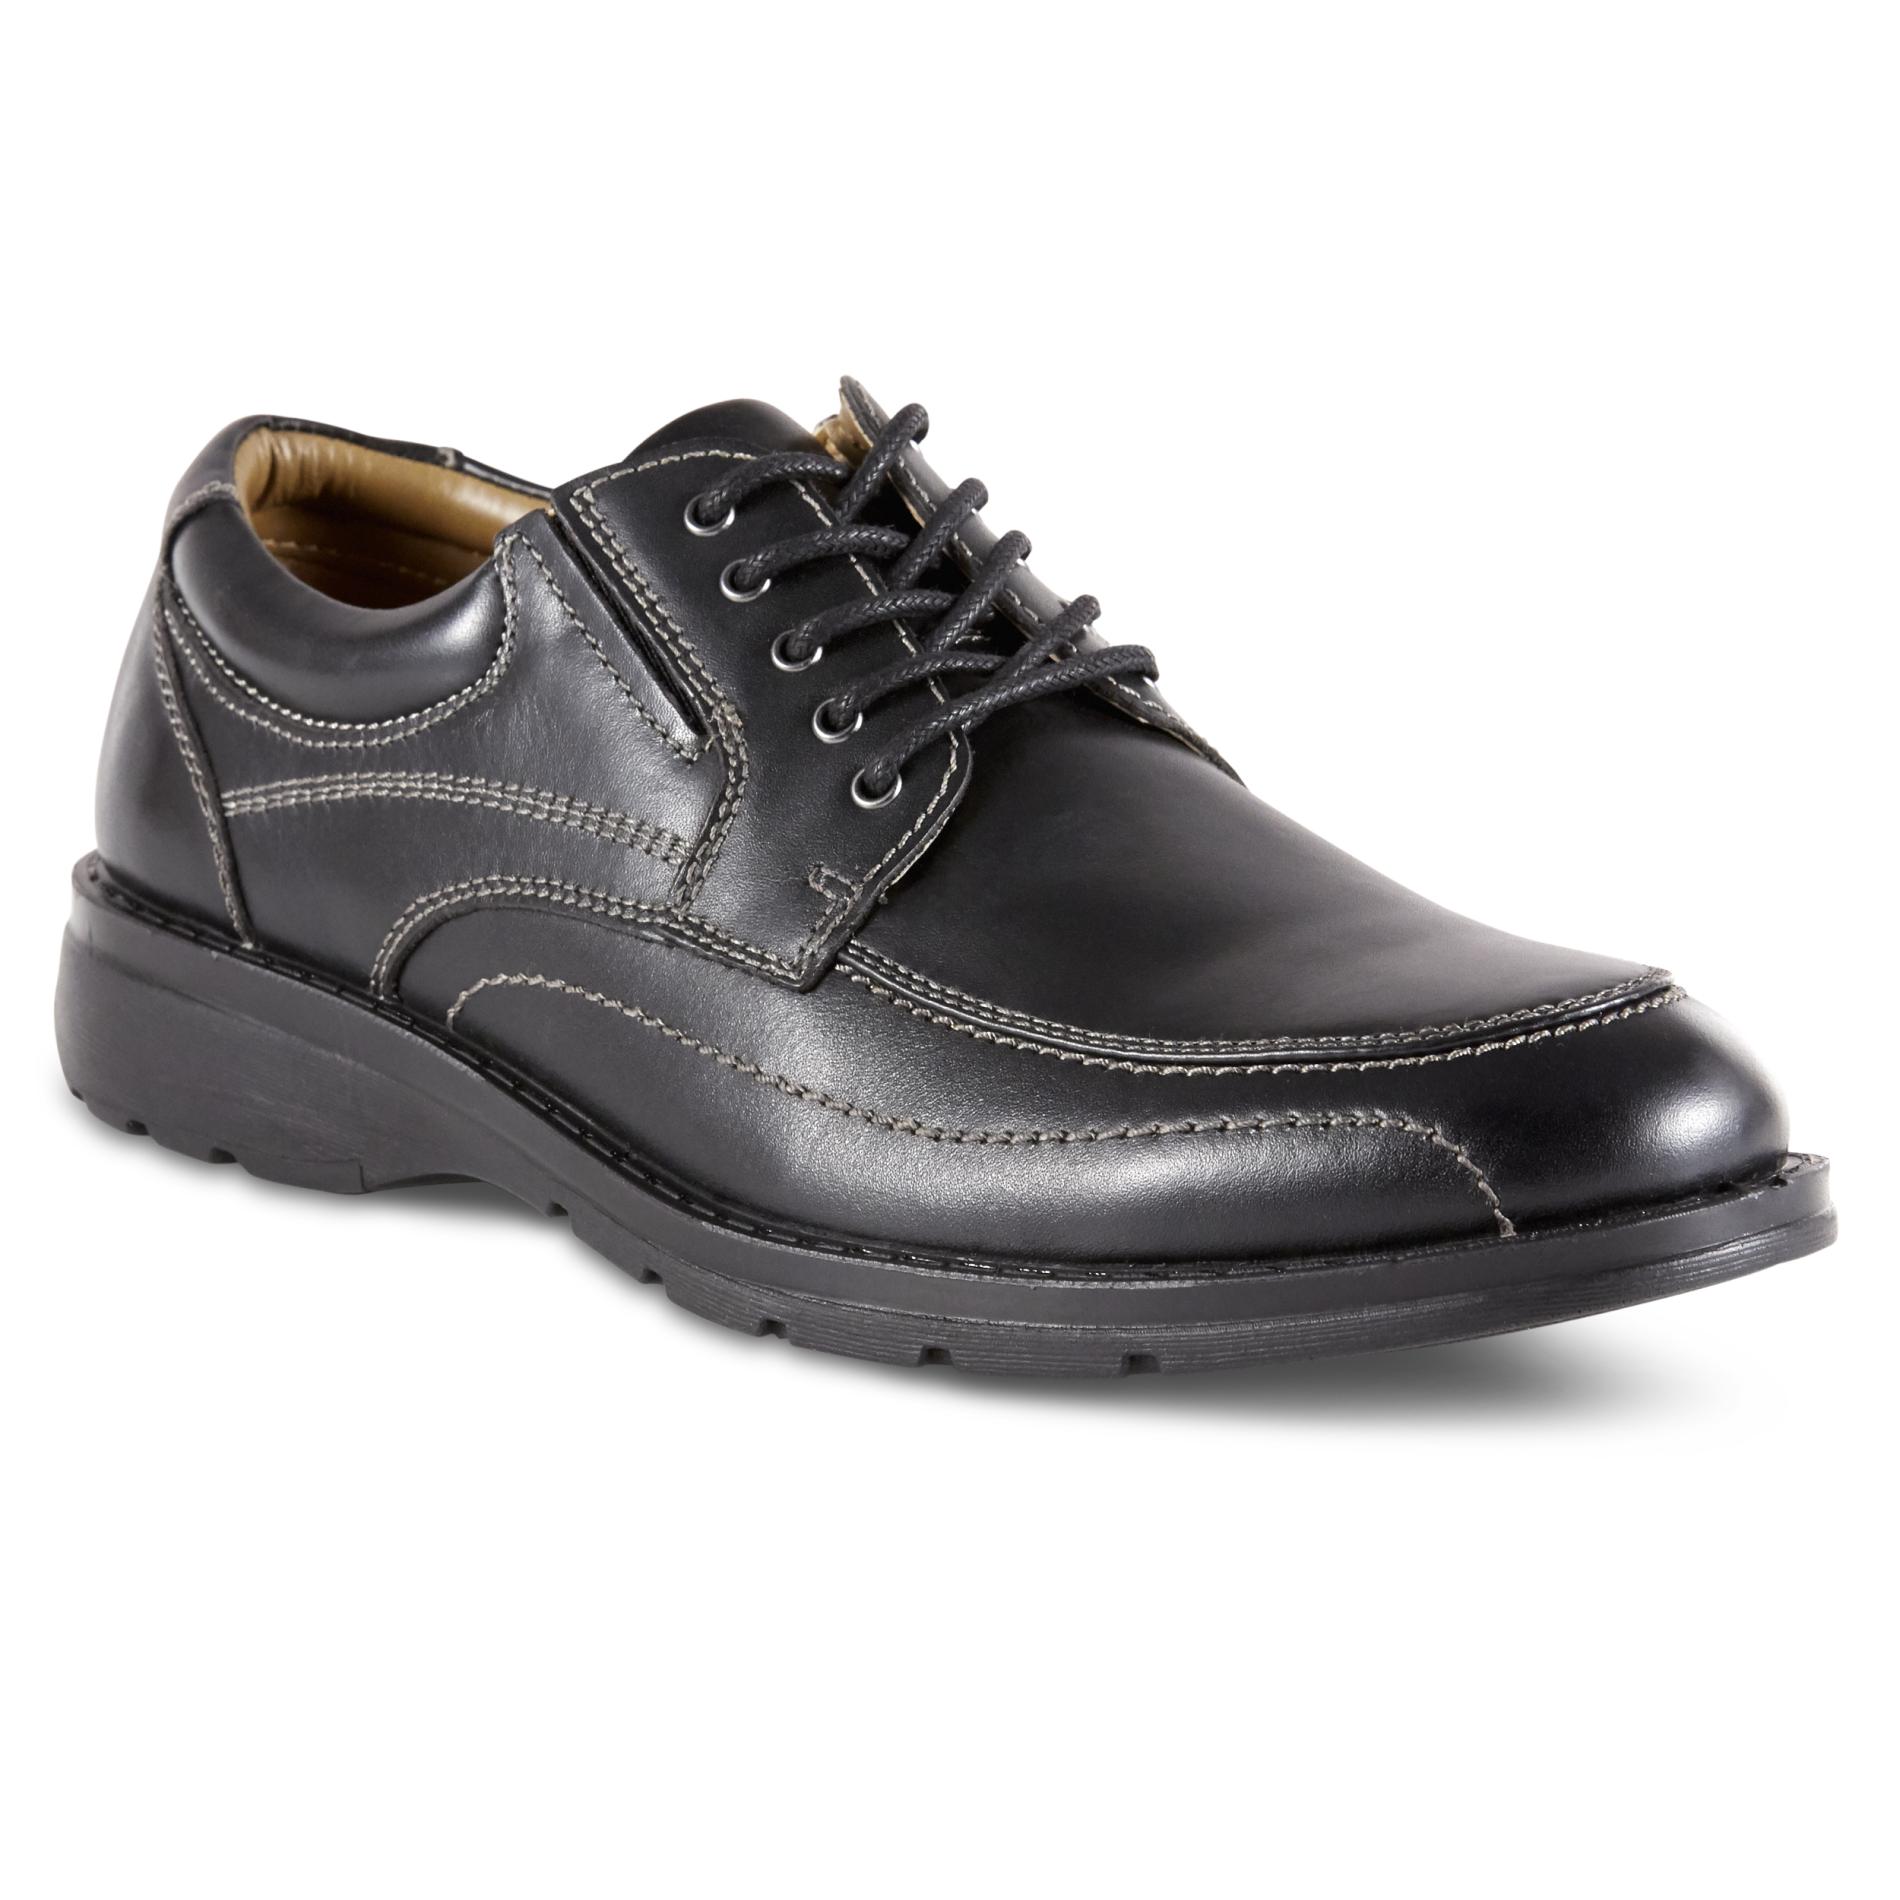 Dockers Men's Barker Oxford Shoe - Black